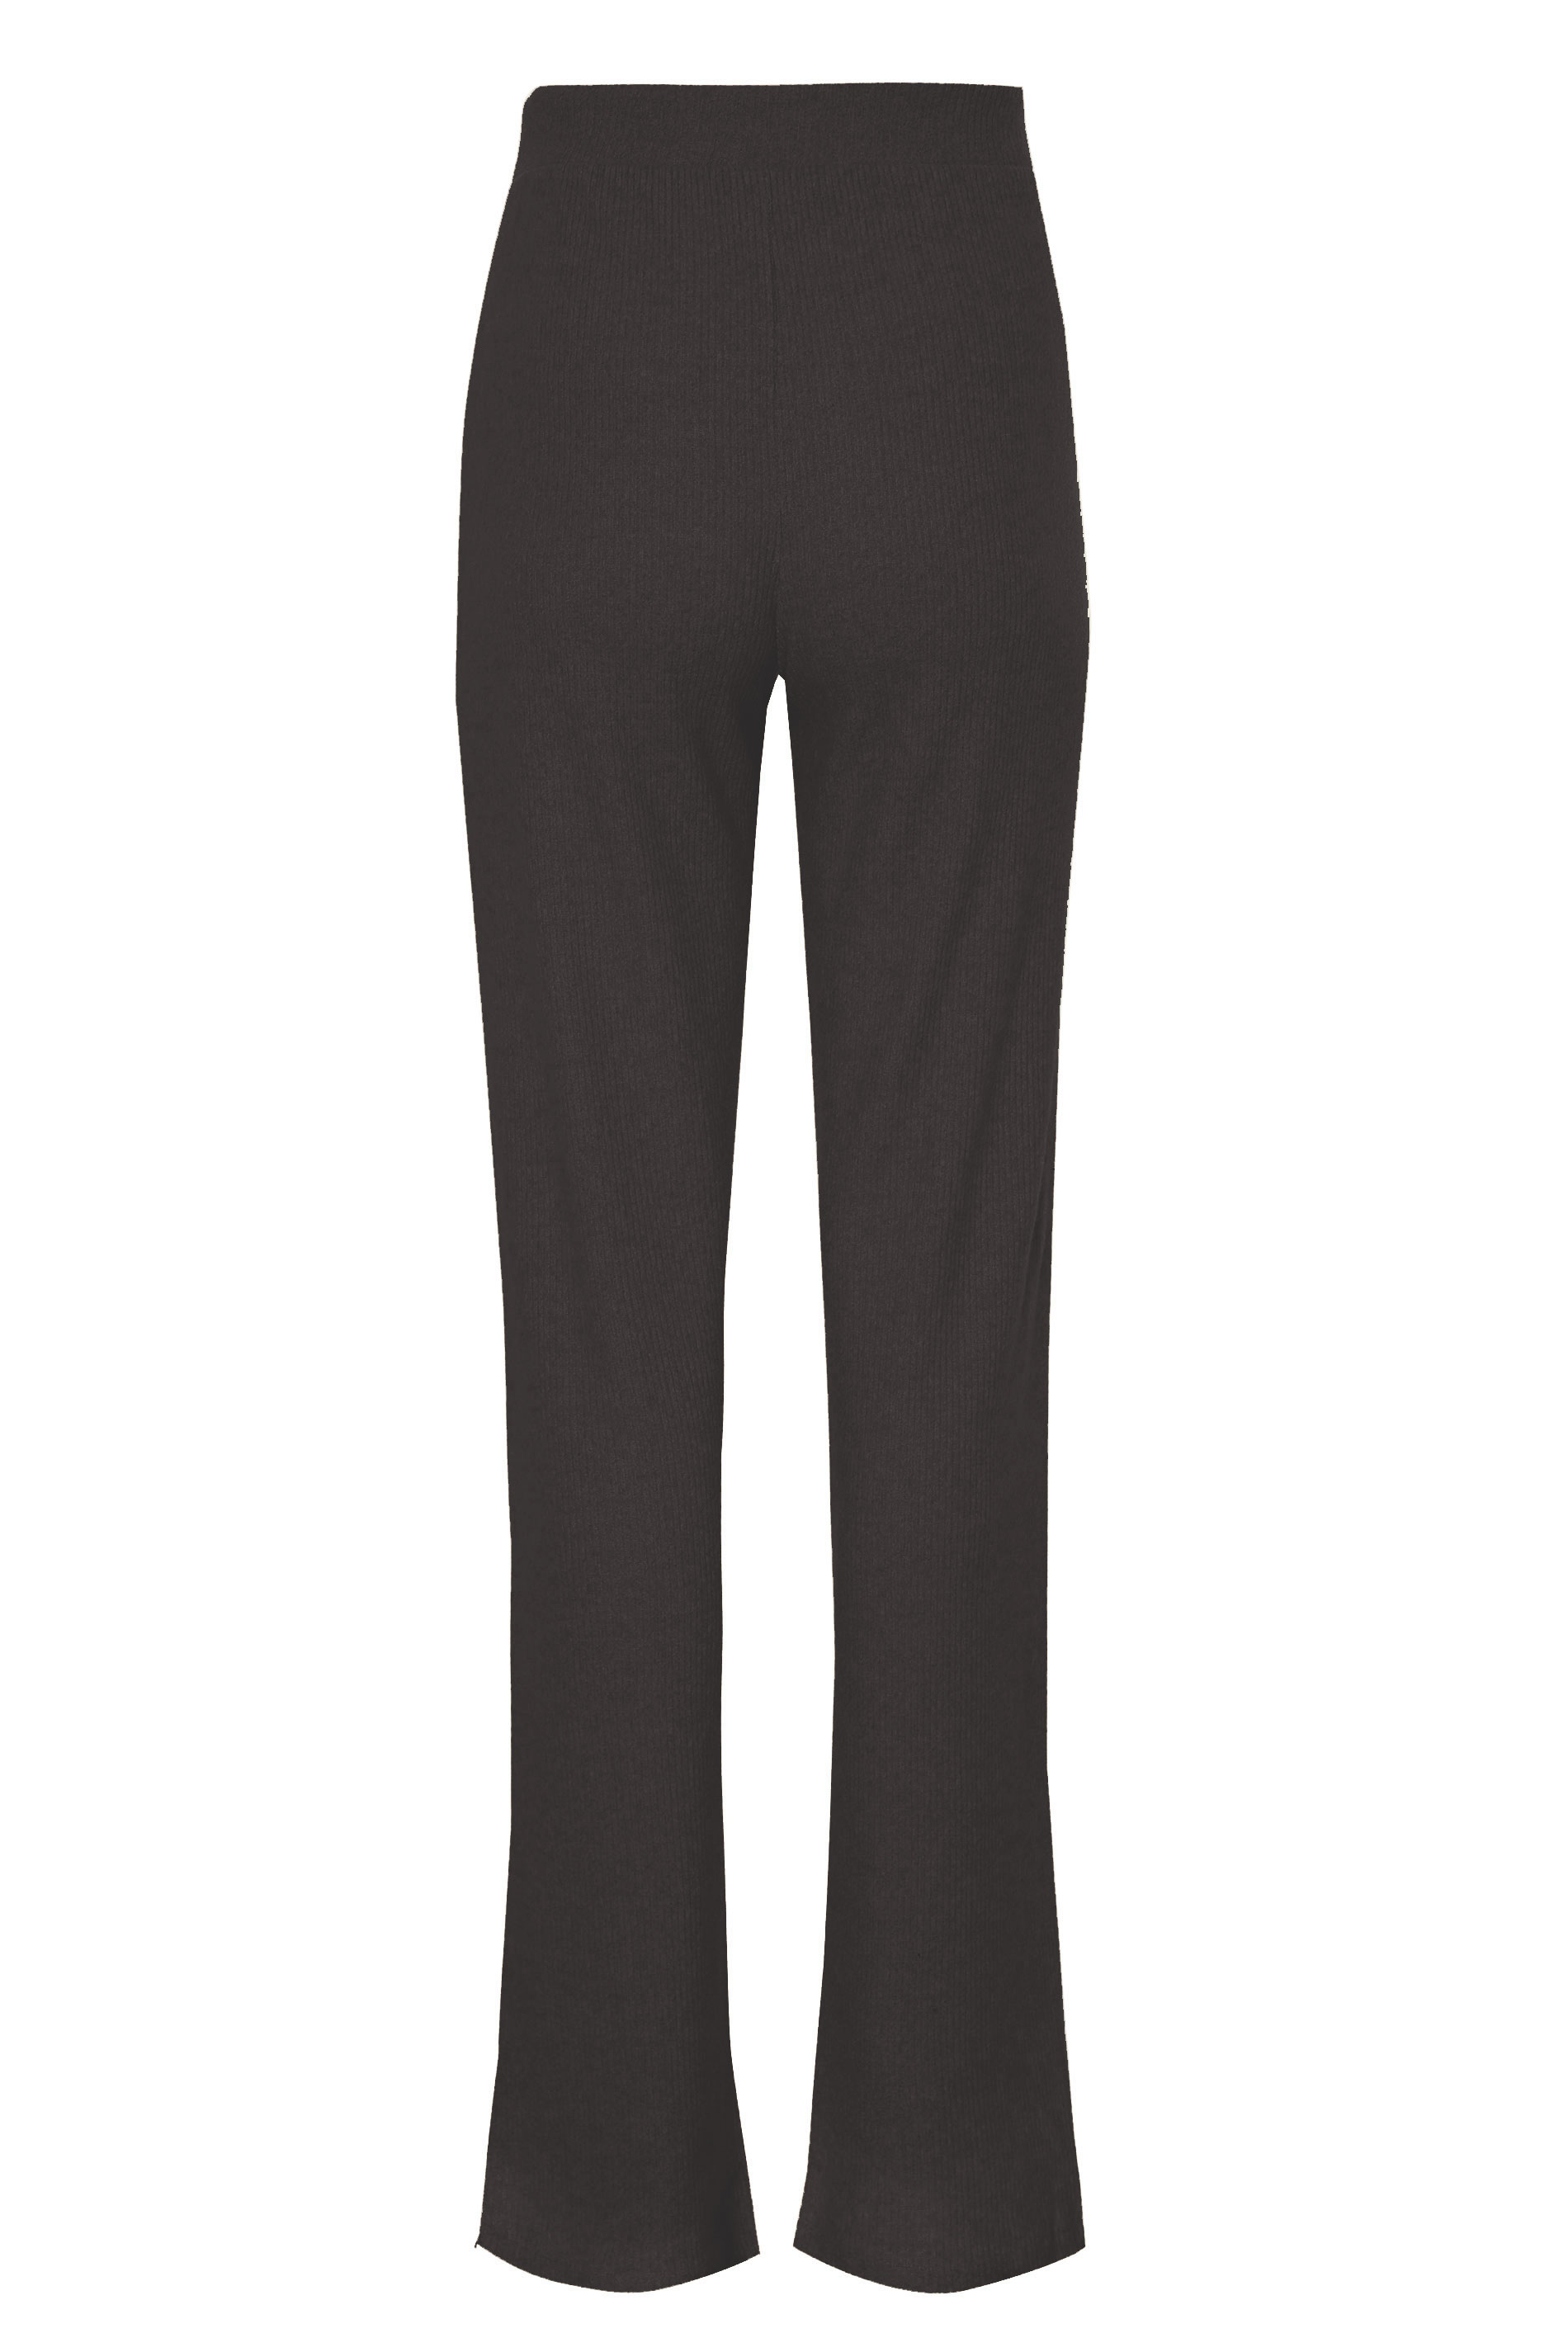 LTS Black Soft Touch Rib Trousers | Long Tall Sally